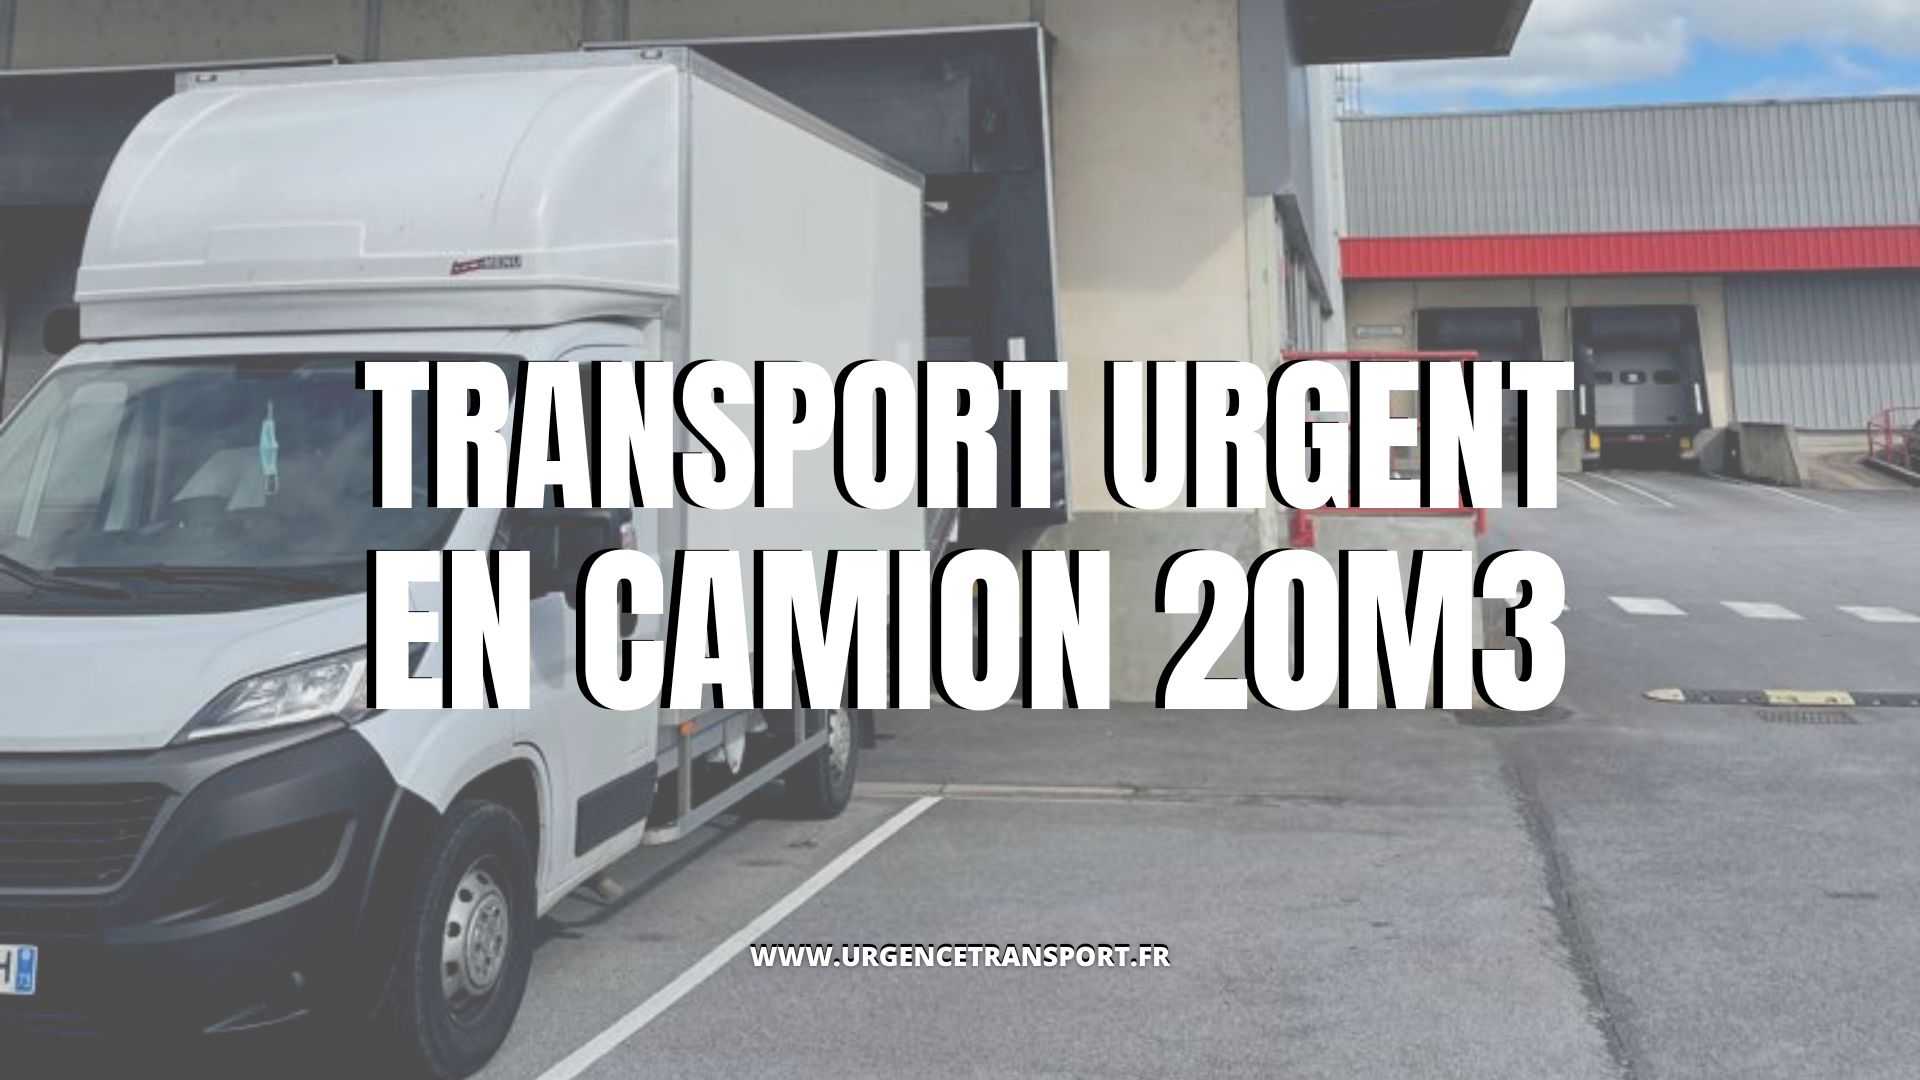 urgencetransport.fr - transport urgent camion 20m3